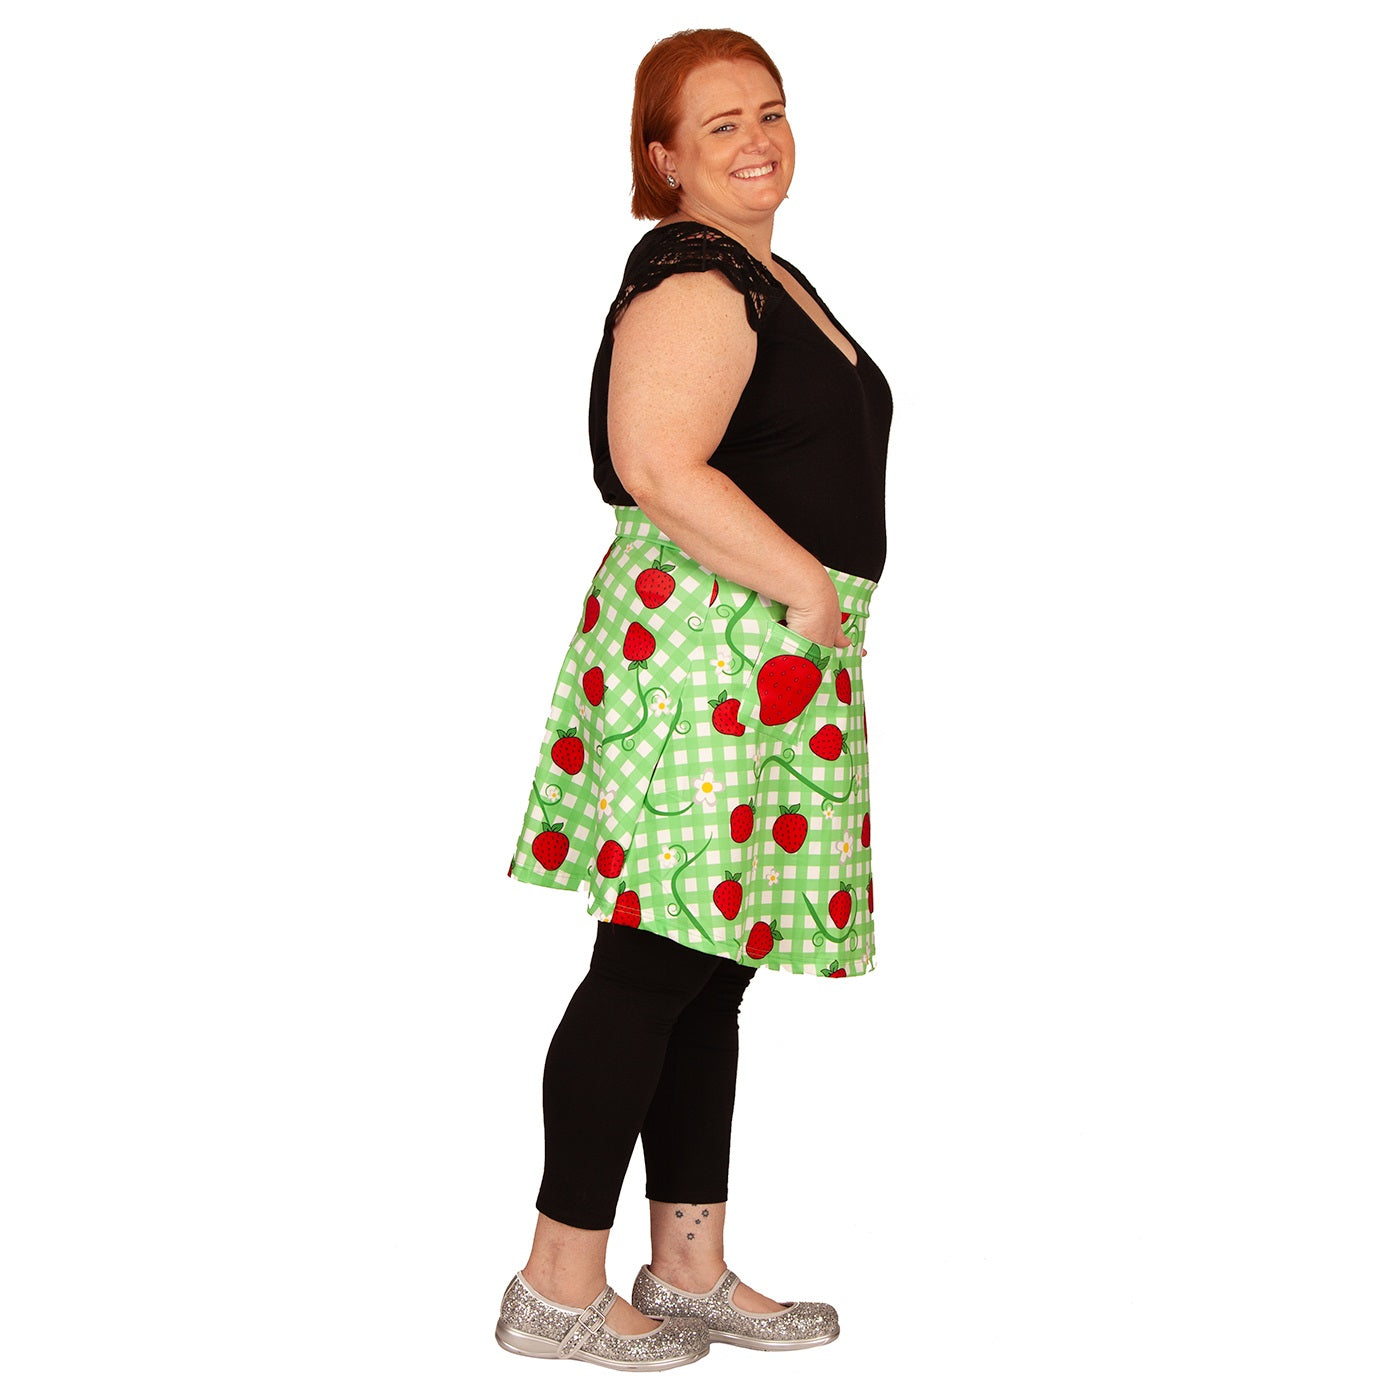 Berry Picnic Short Skirt by RainbowsAndFairies.com.au (Strawberry Shortcake - Green - Skirt With Pockets - Aline Skirt - Vintage Inspired - Kitsch) - SKU: CL_SHORT_BERRY_ORG - Pic-06